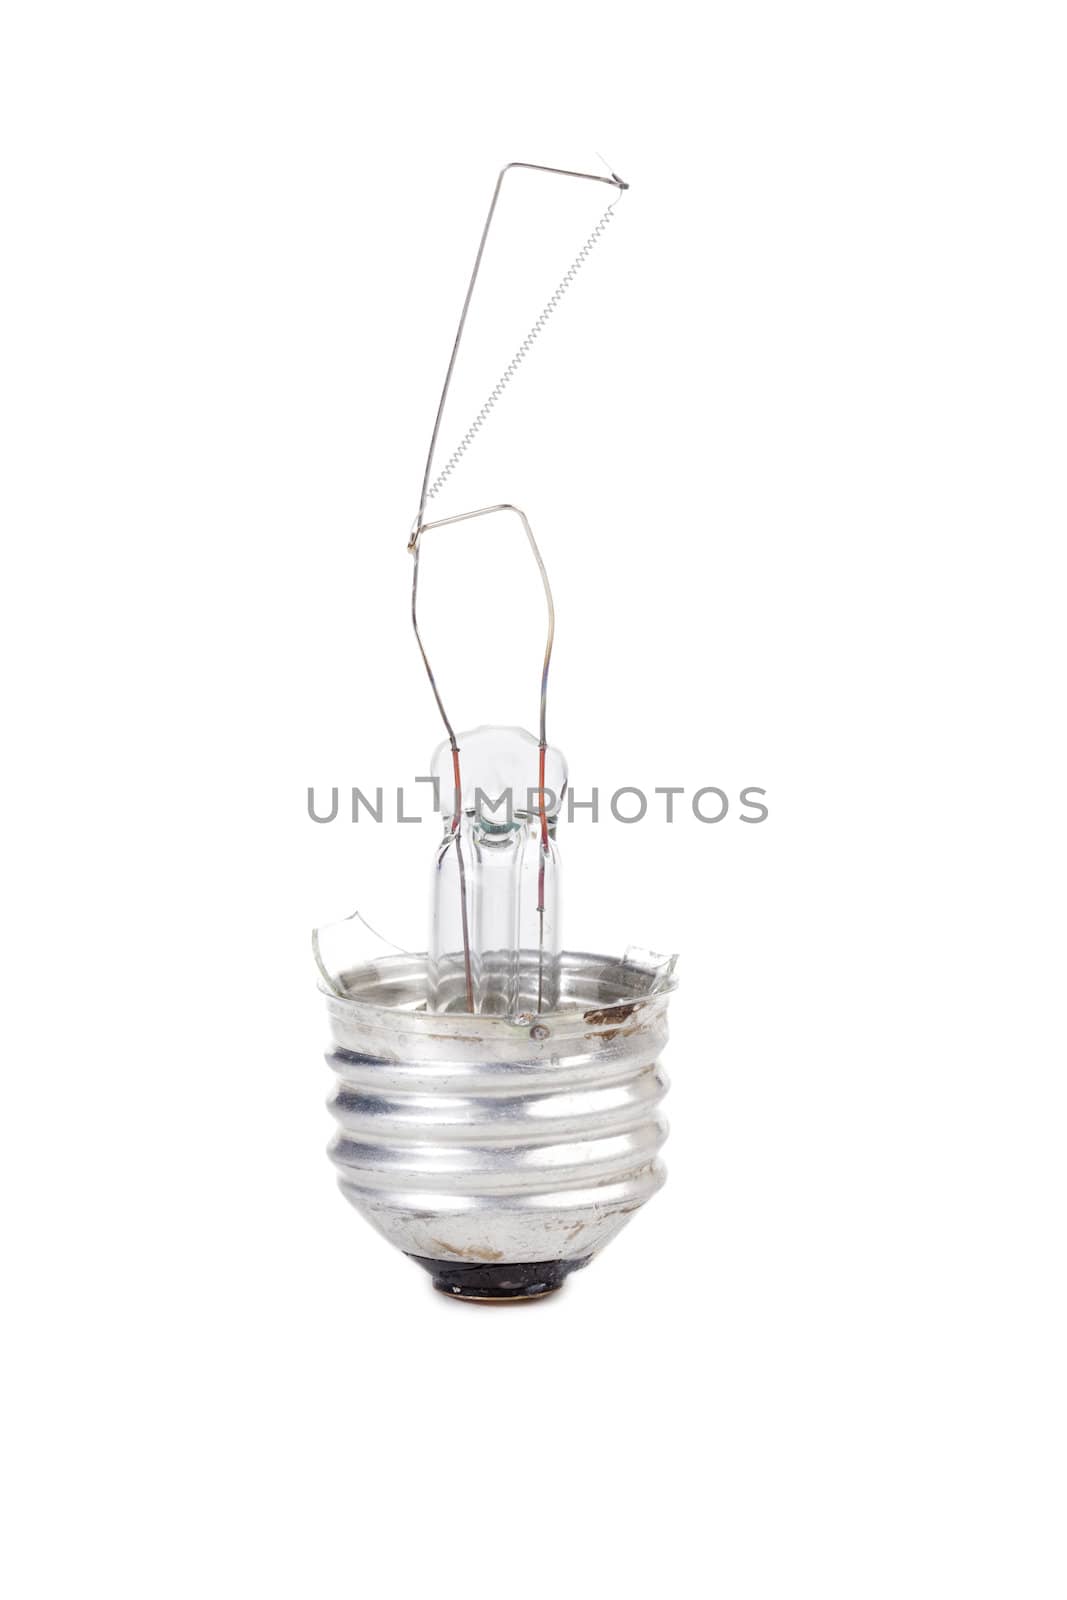 a broken light bulb by kozzi